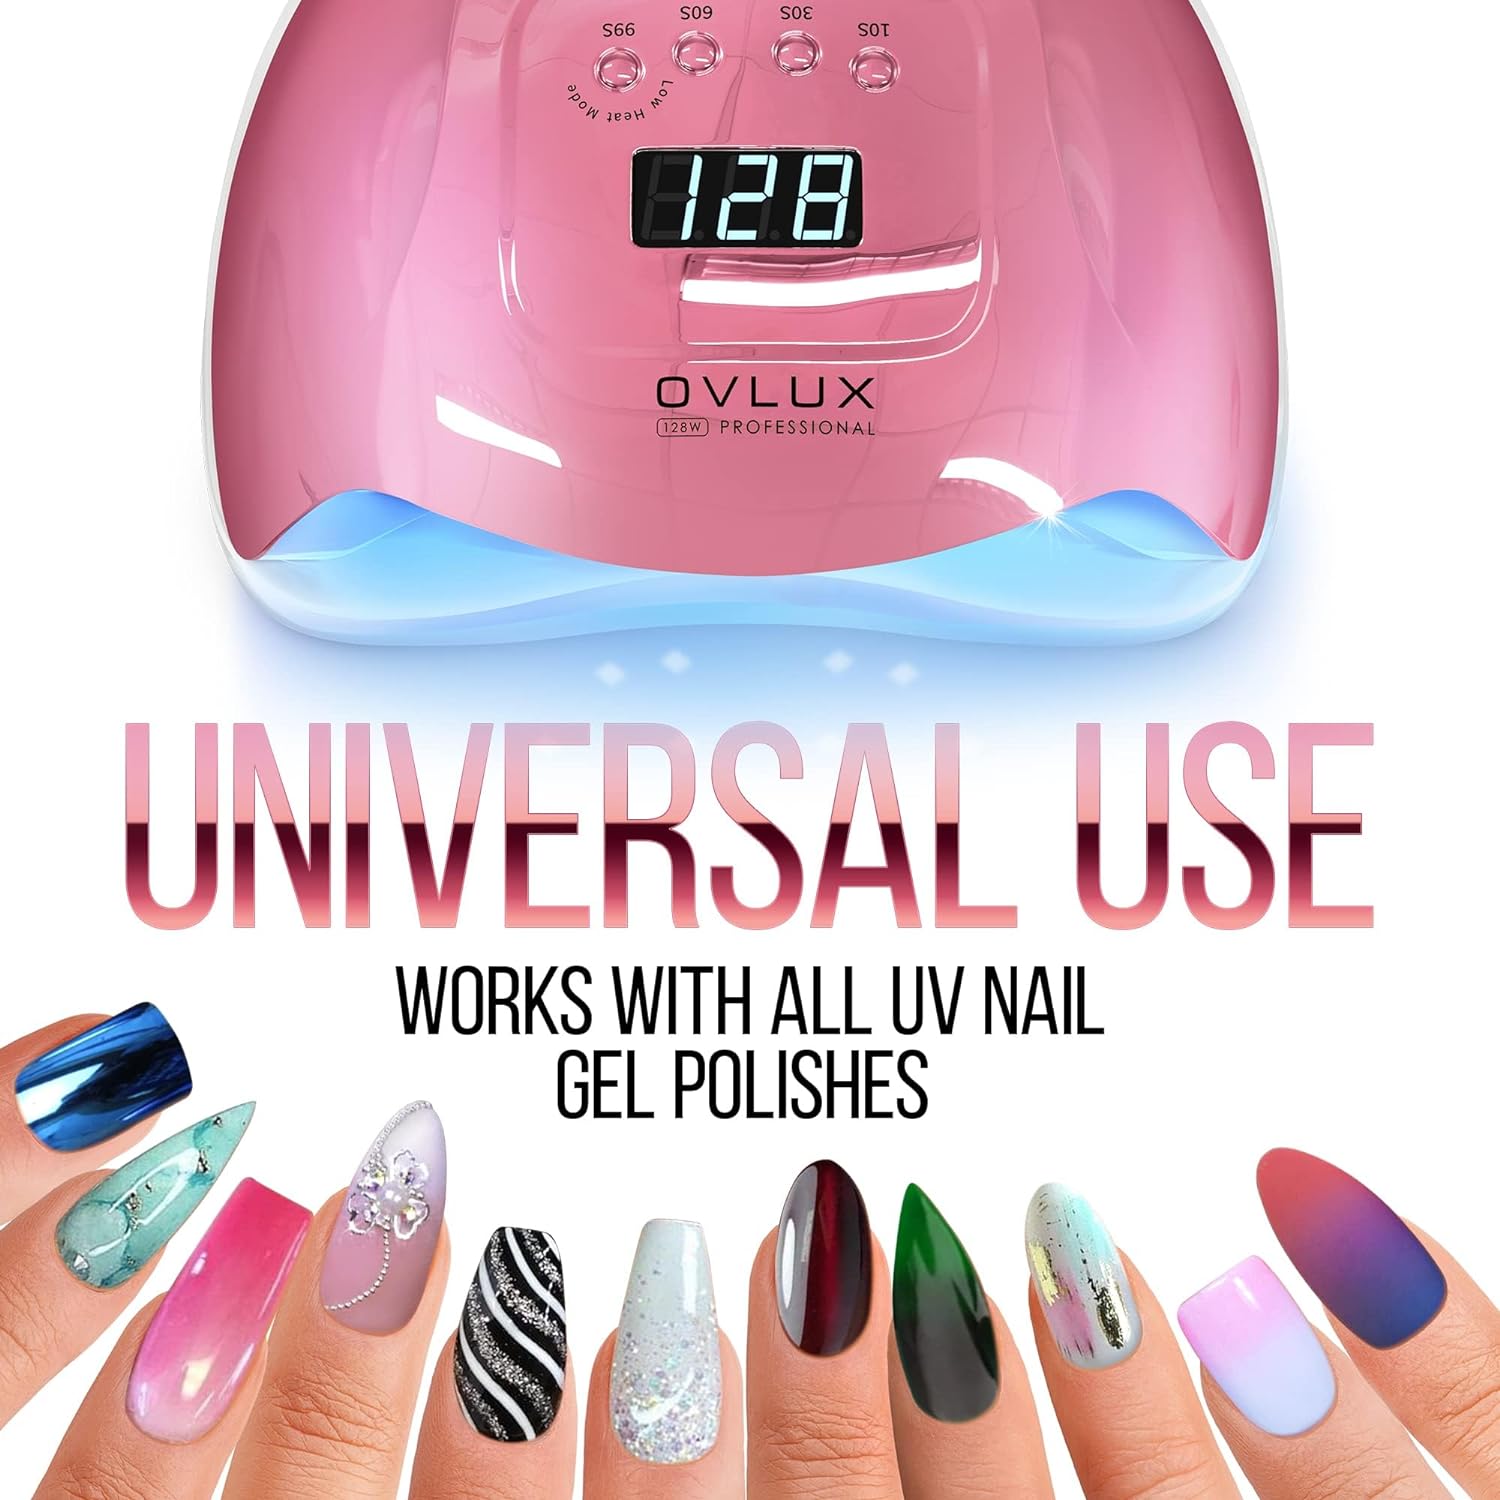 UV Light for Nails, 128W Professional UV LED Nail Lamp, Gel Polish Uv Led Nail Dryer Lamp Light for Gel Nails Polish Manicure Salon Curing Lamp Nail Art Tools with Automatic Sensor (Pink)